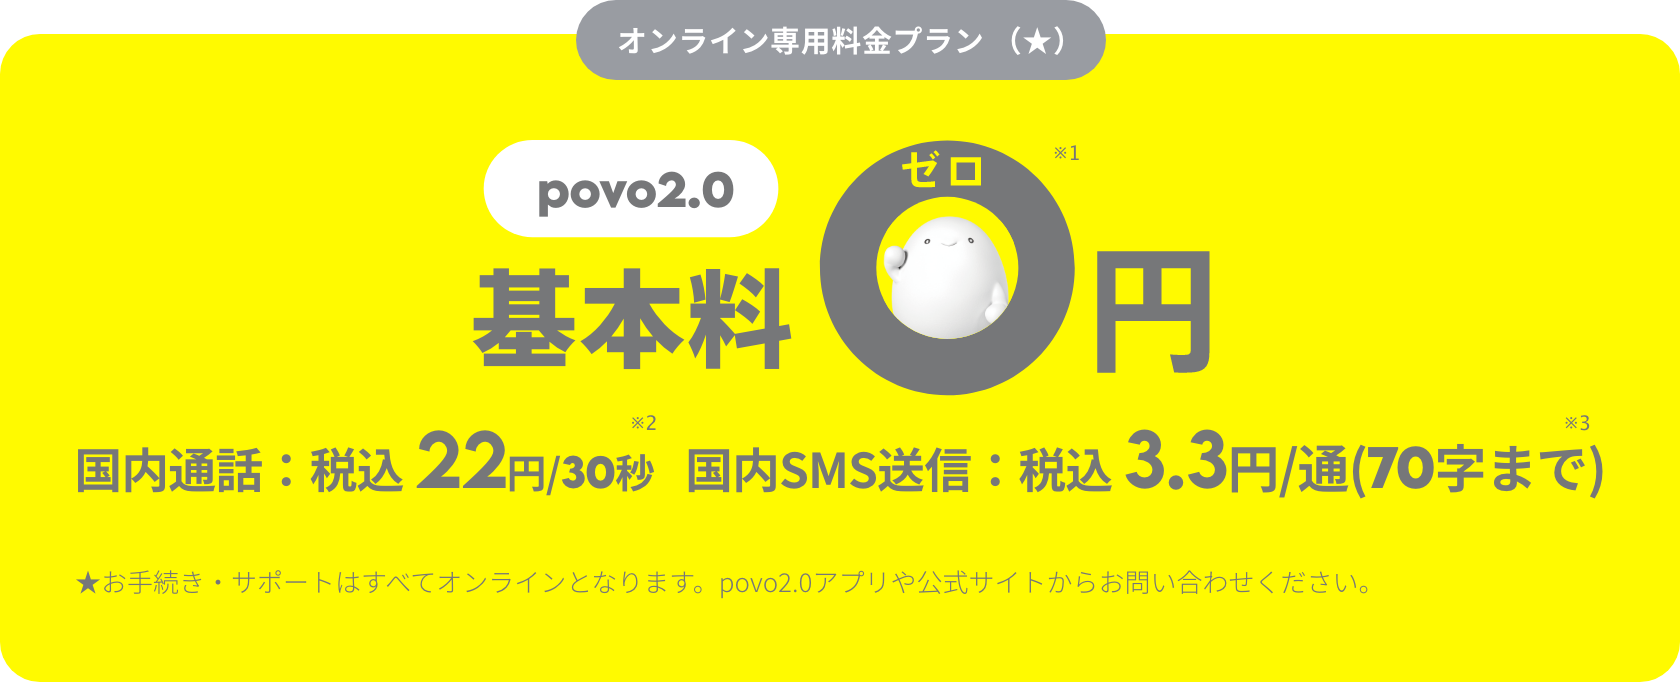 povo2.0 基本料 ゼロ円